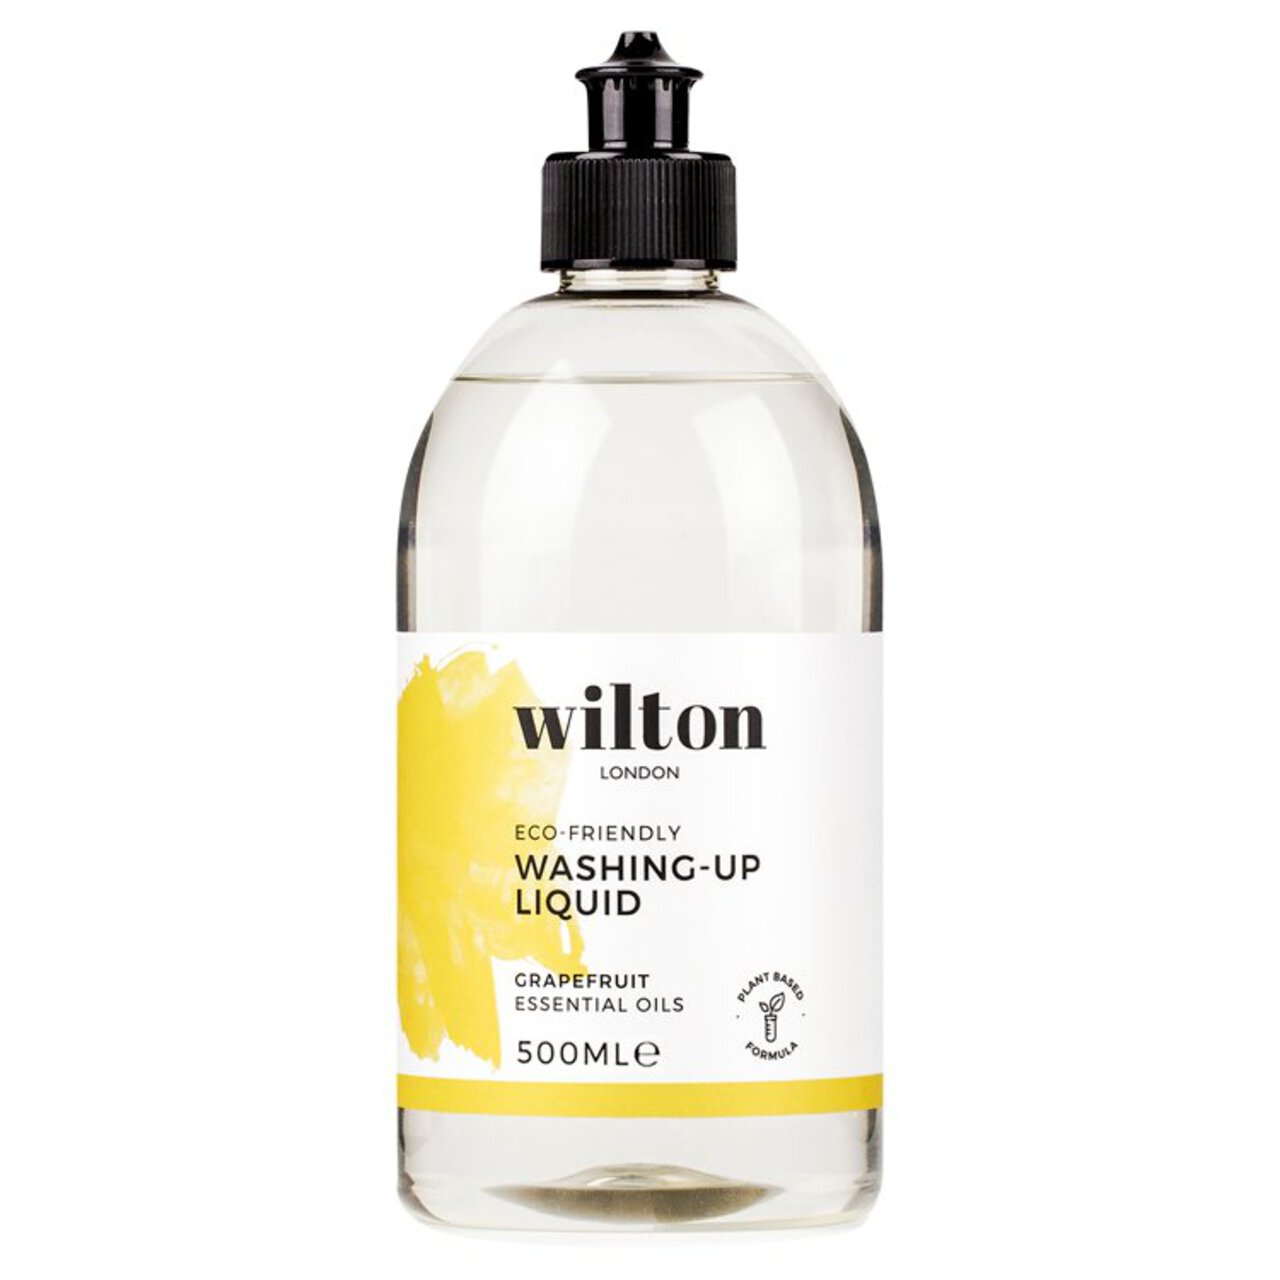 Wilton London Eco Washing-Up Liquid Grapefruit 500ml